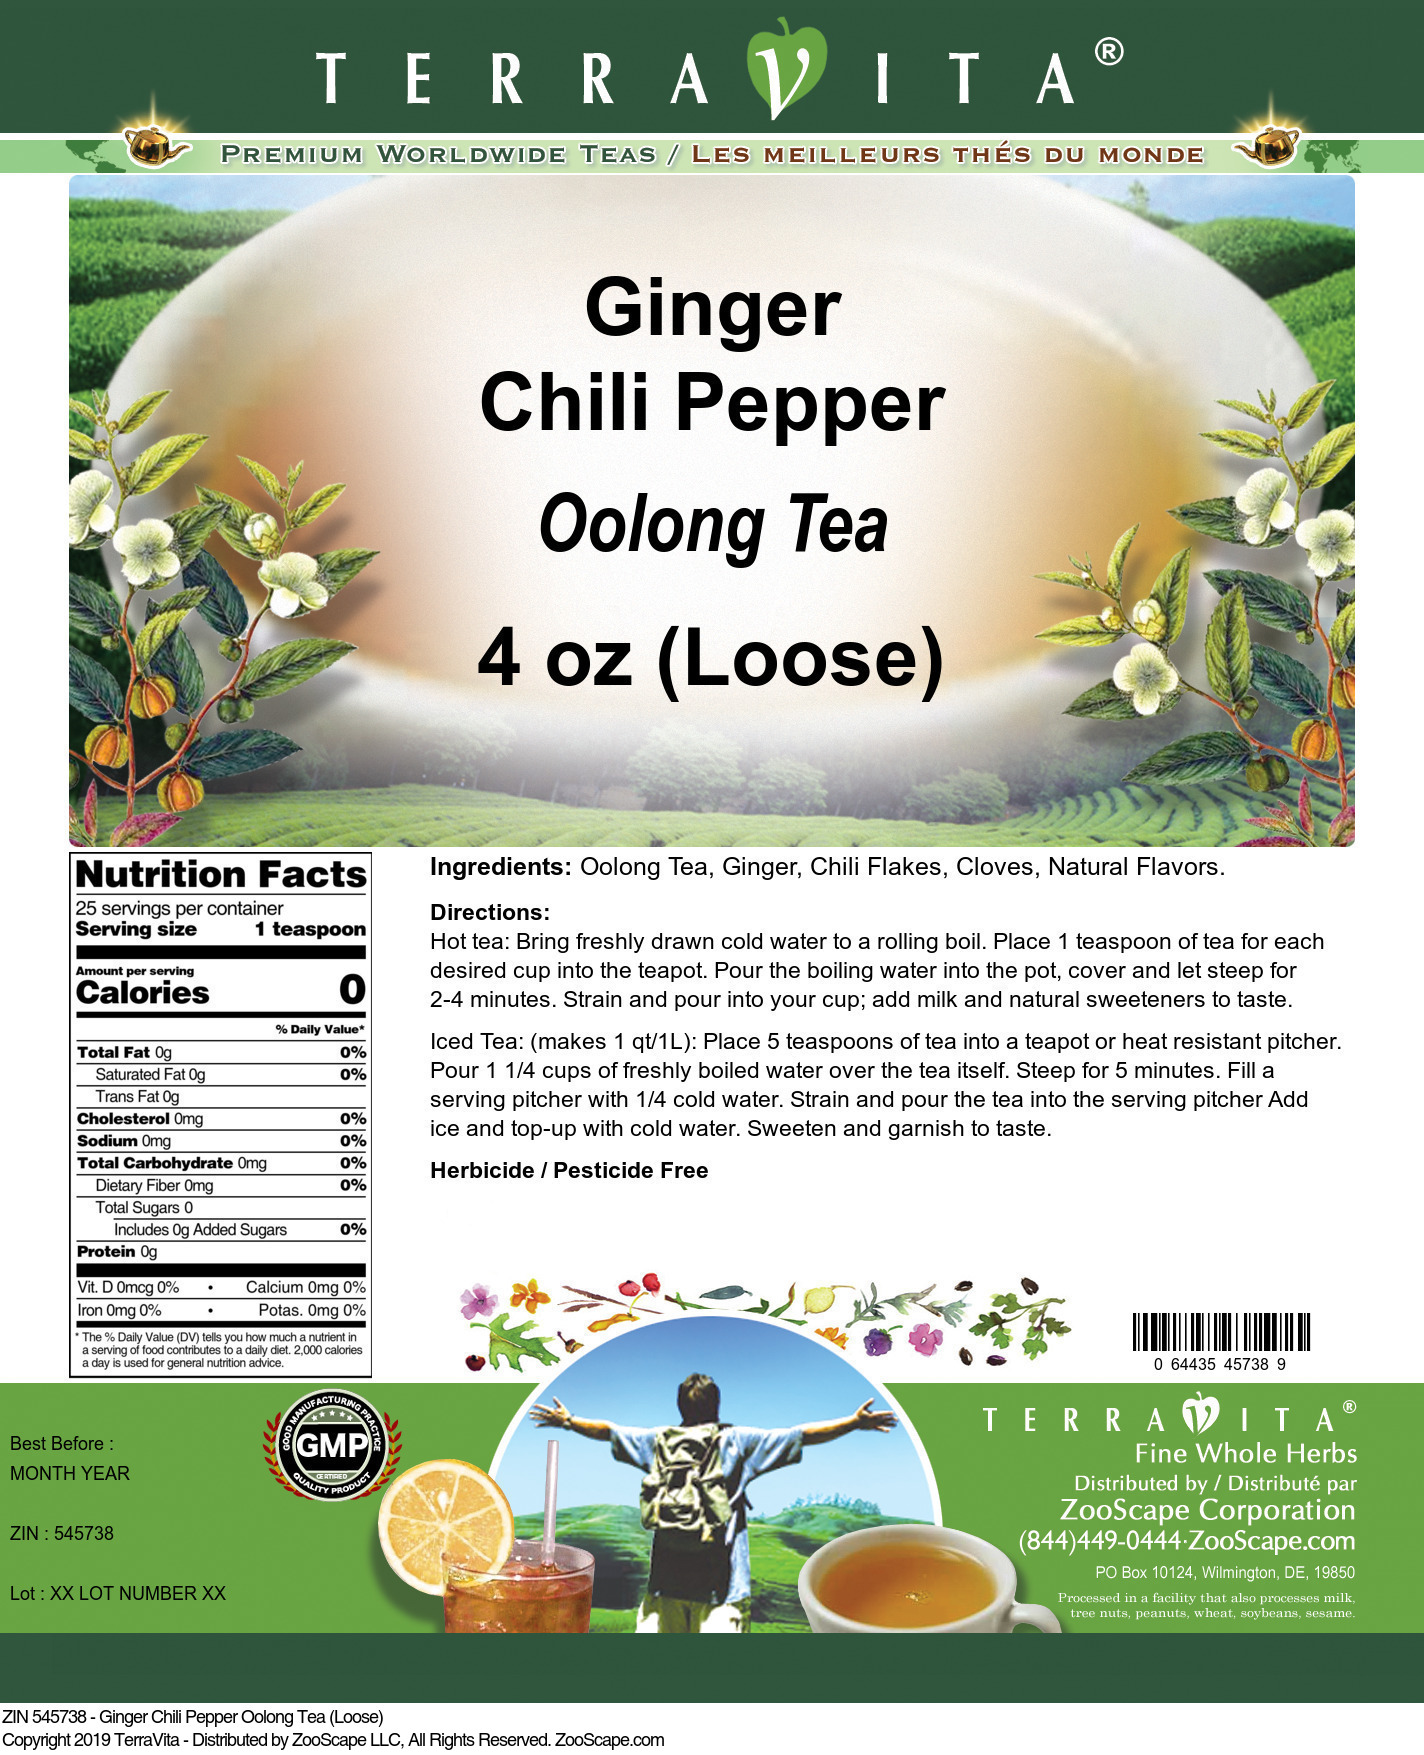 Ginger Chili Pepper Oolong Tea (Loose) - Label